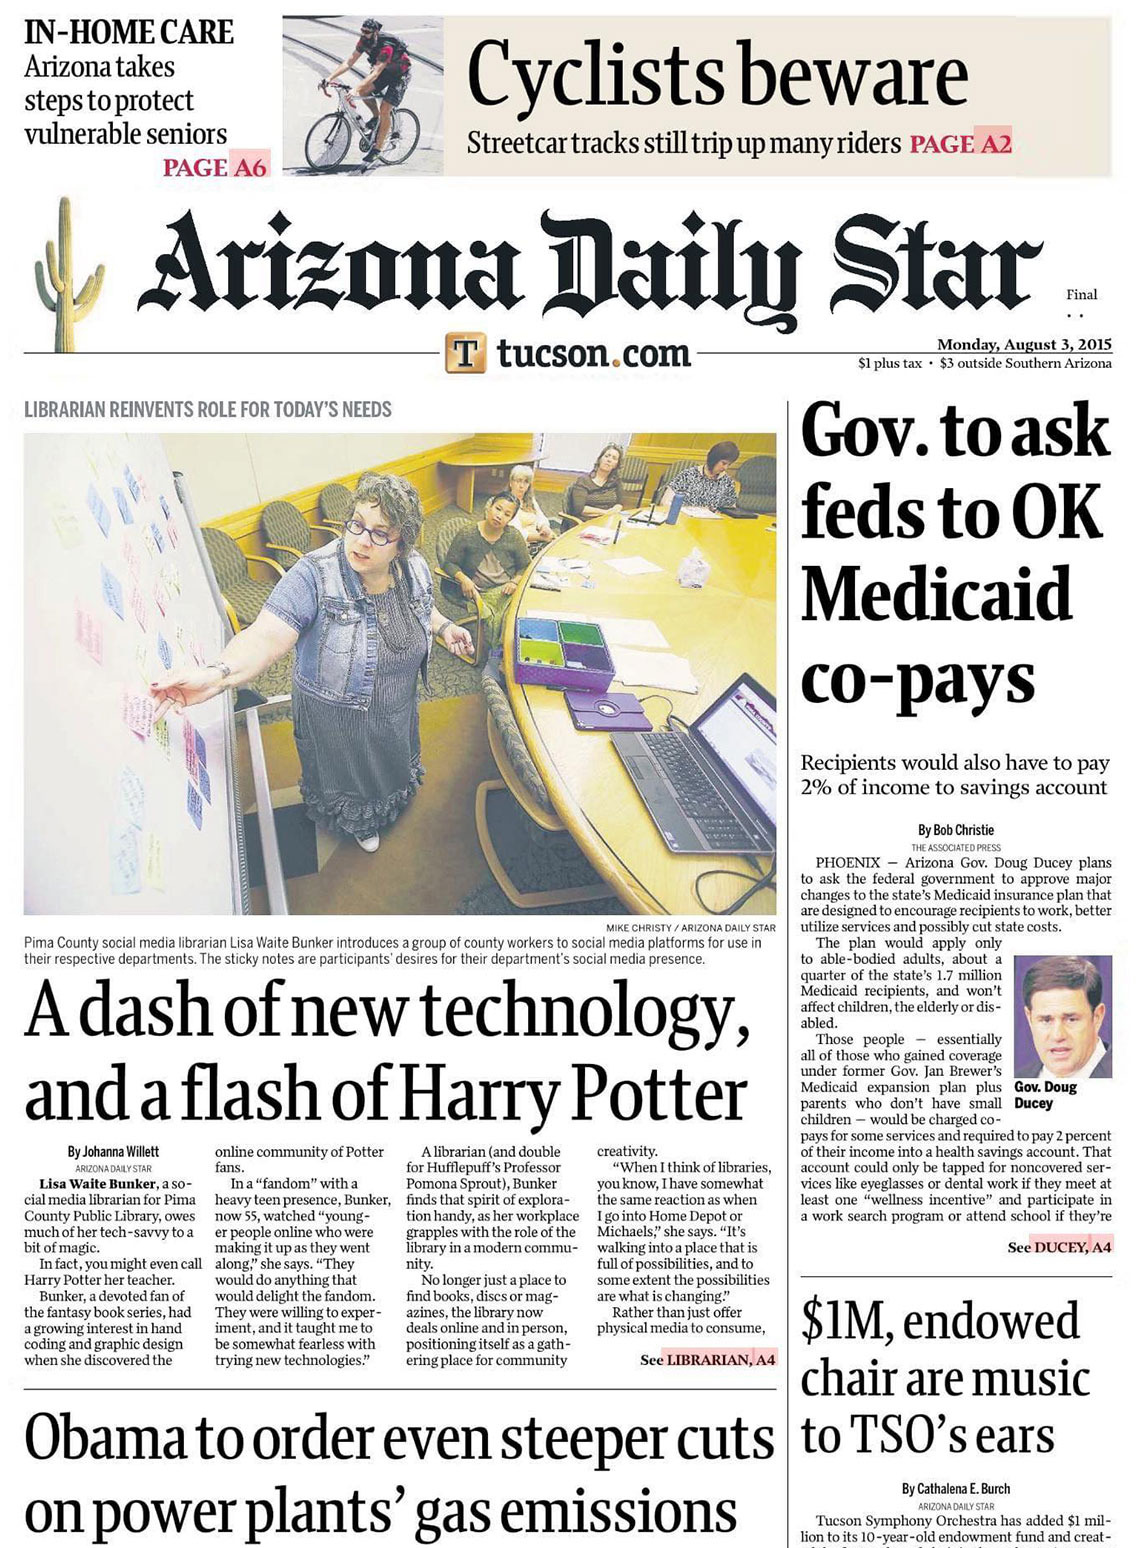 Arizona Daily Star newspaper featuring Lisa Bunker